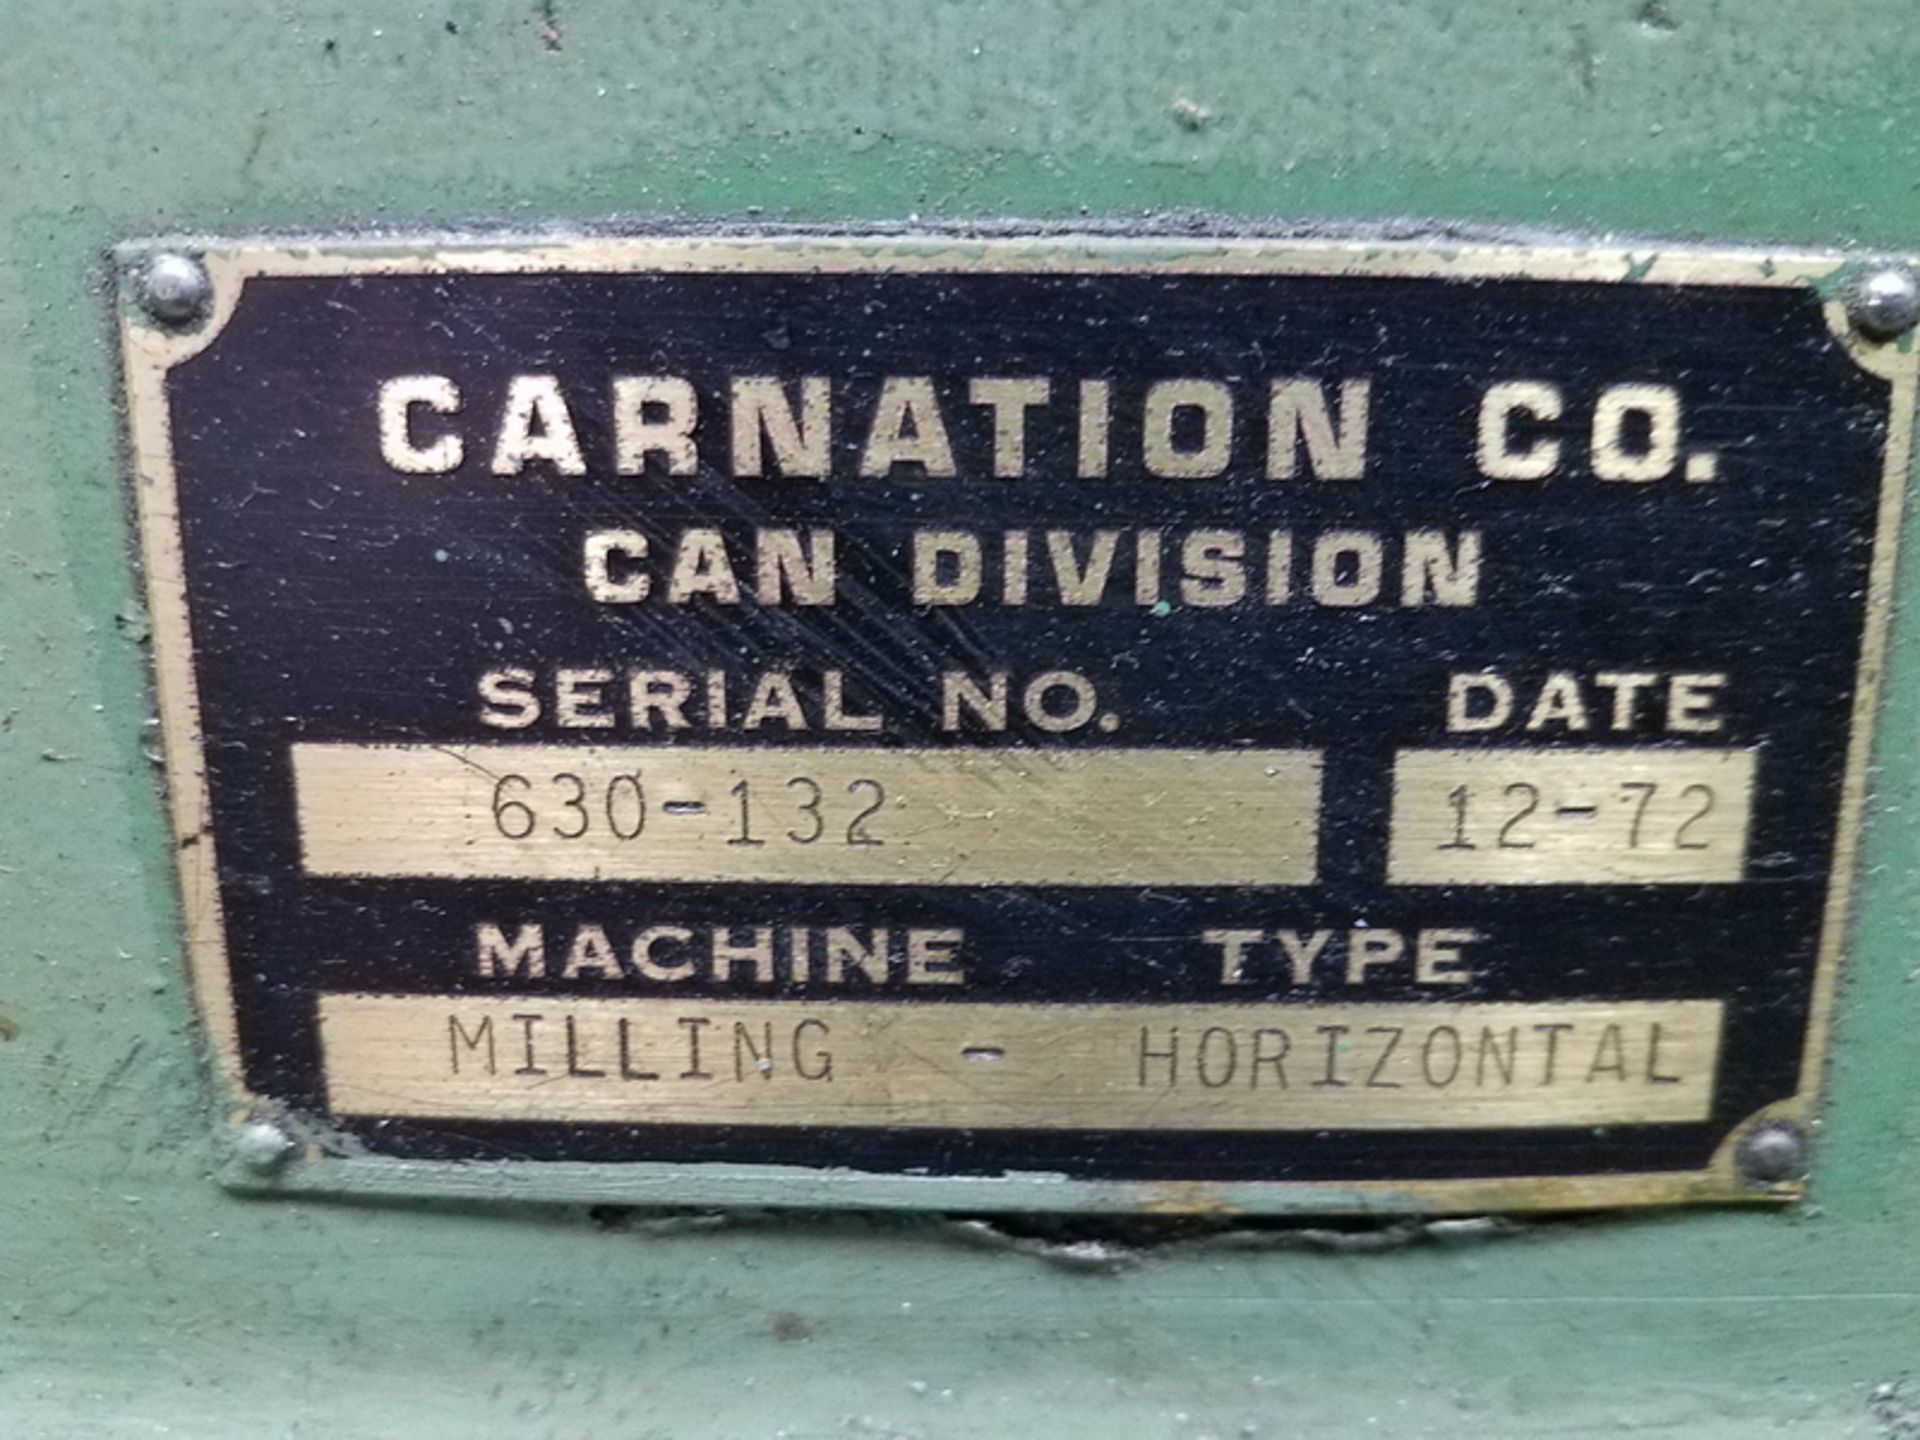 Kearney & Trecker Milwaukee Model 205 SA Horizontal Milling Machine, S/N: 630-132; with 12 in. x - Image 5 of 5